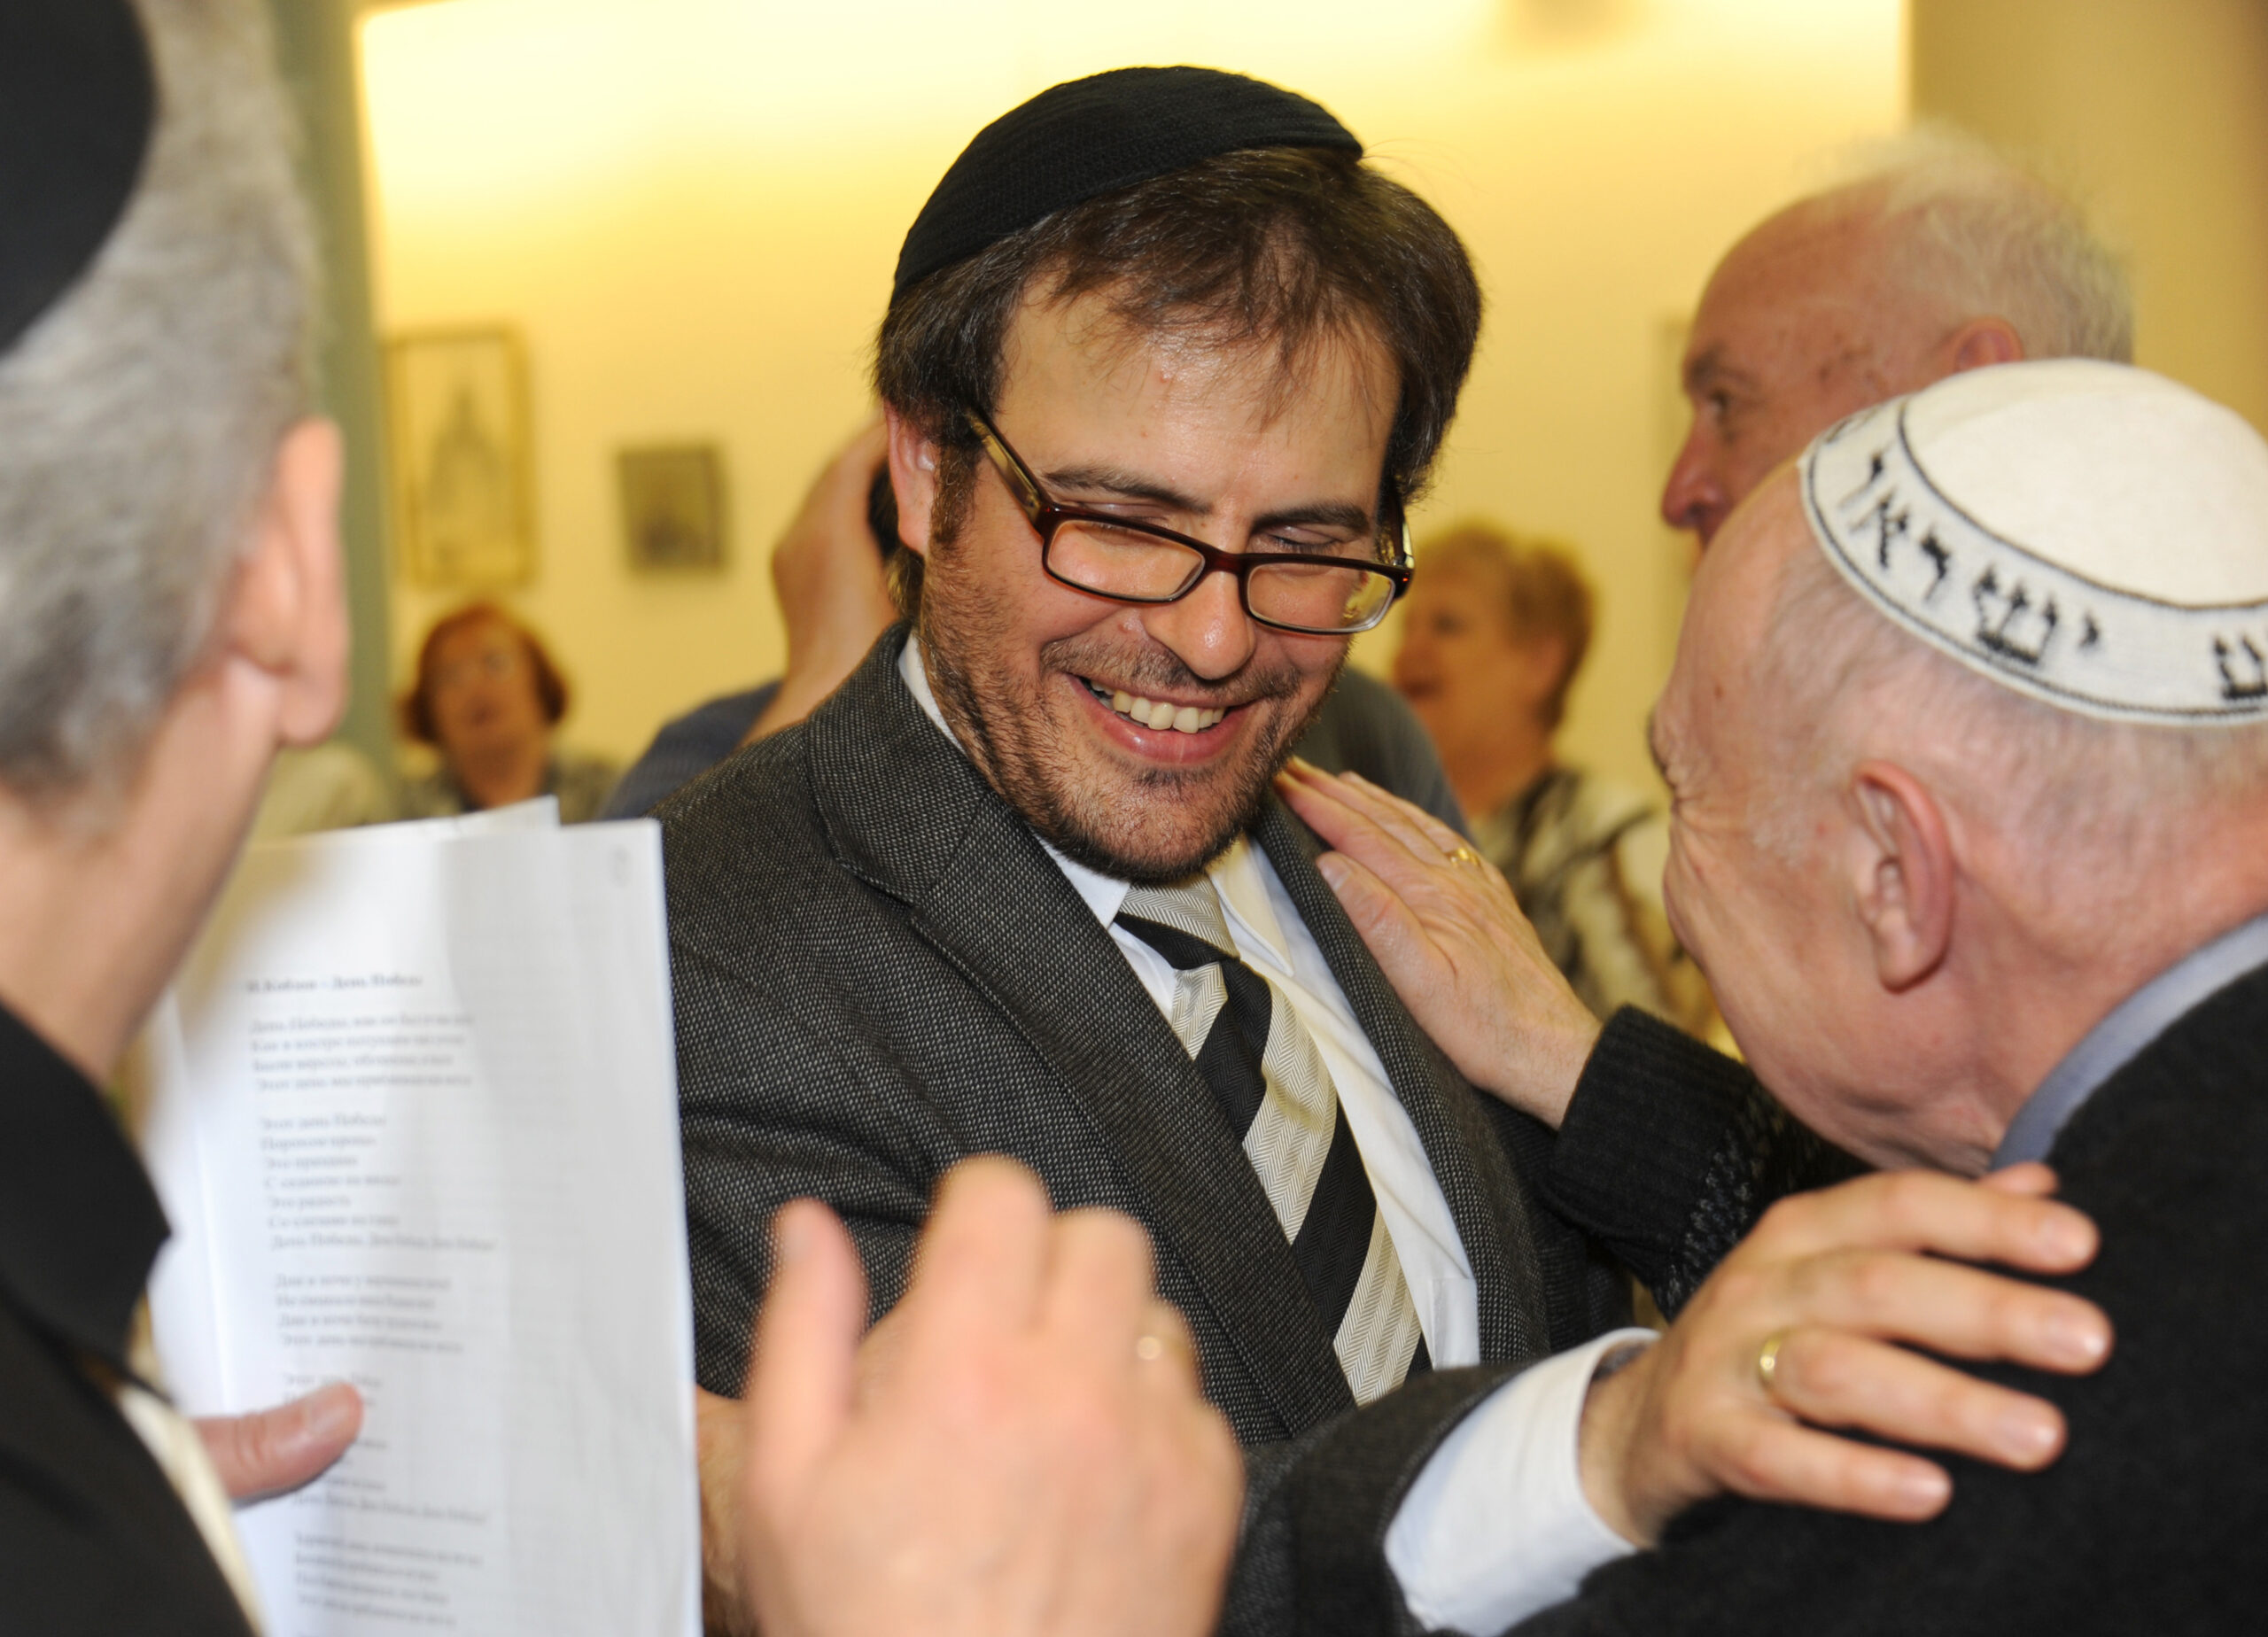 Rabbi Avraham Zeev Nussbaum with community members. Photographer: Igor Eisenschtat. Jewish Community Collection